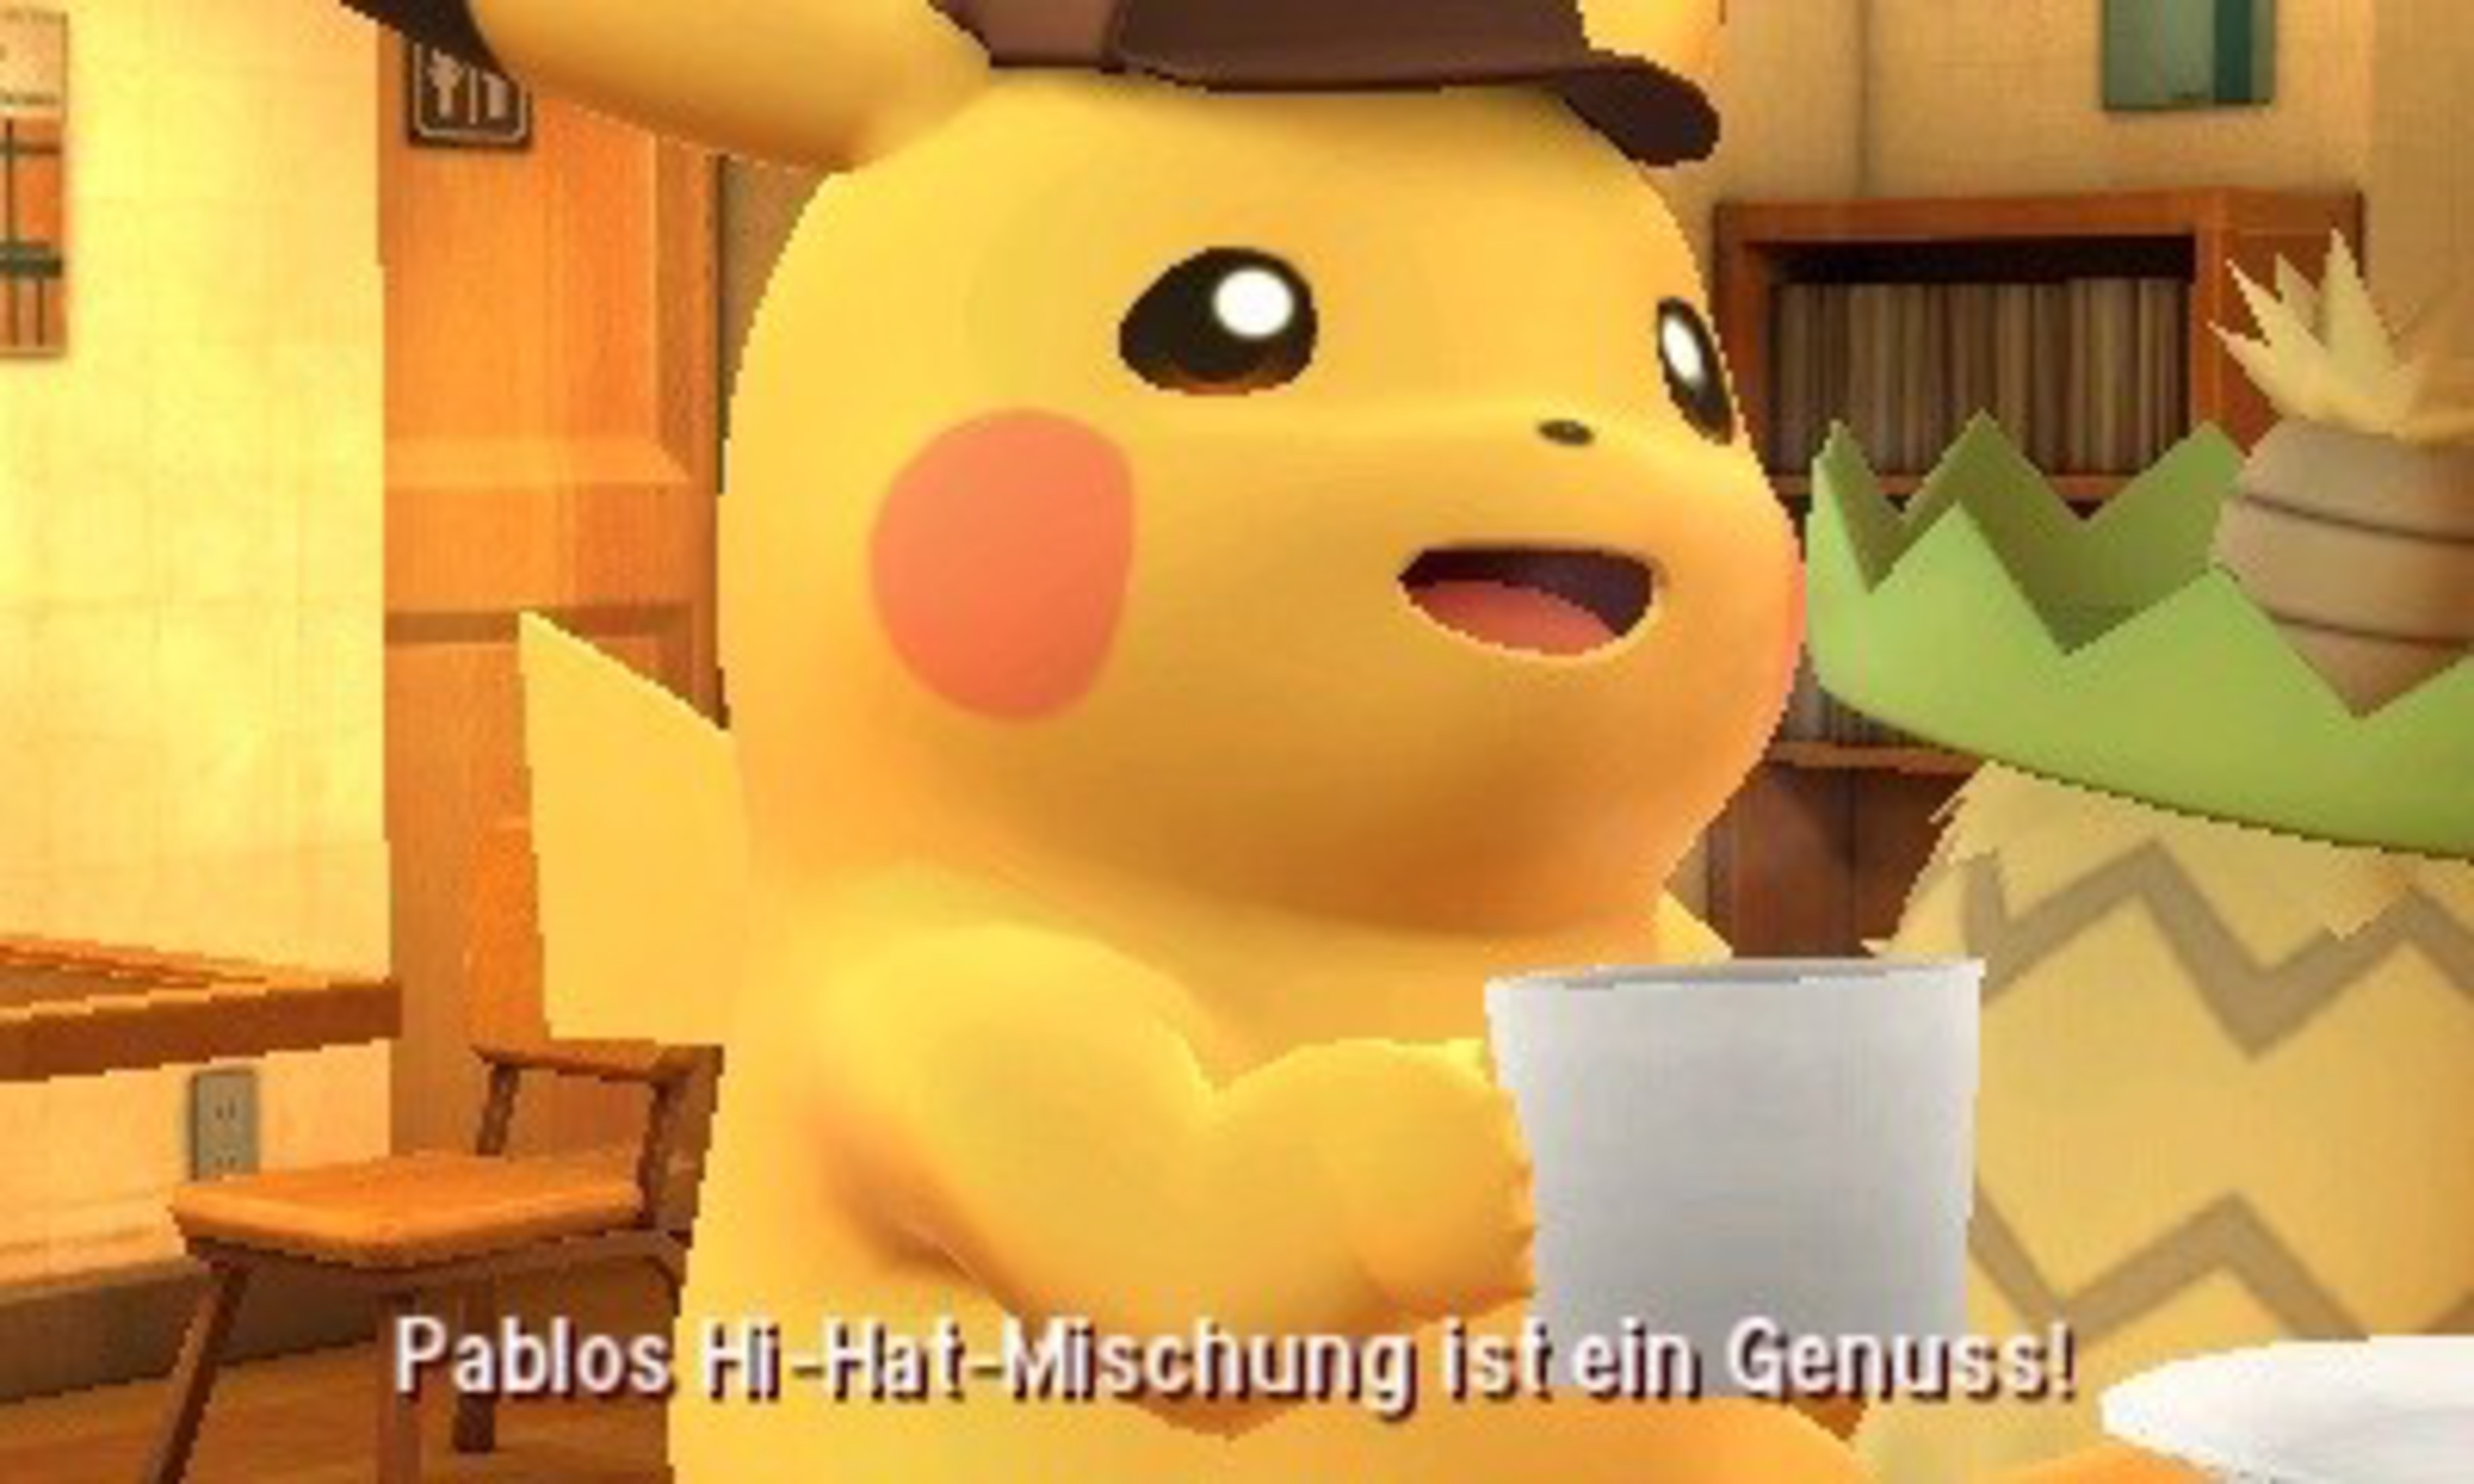 3DS] Pikachu [Nintendo Meisterdetektiv -